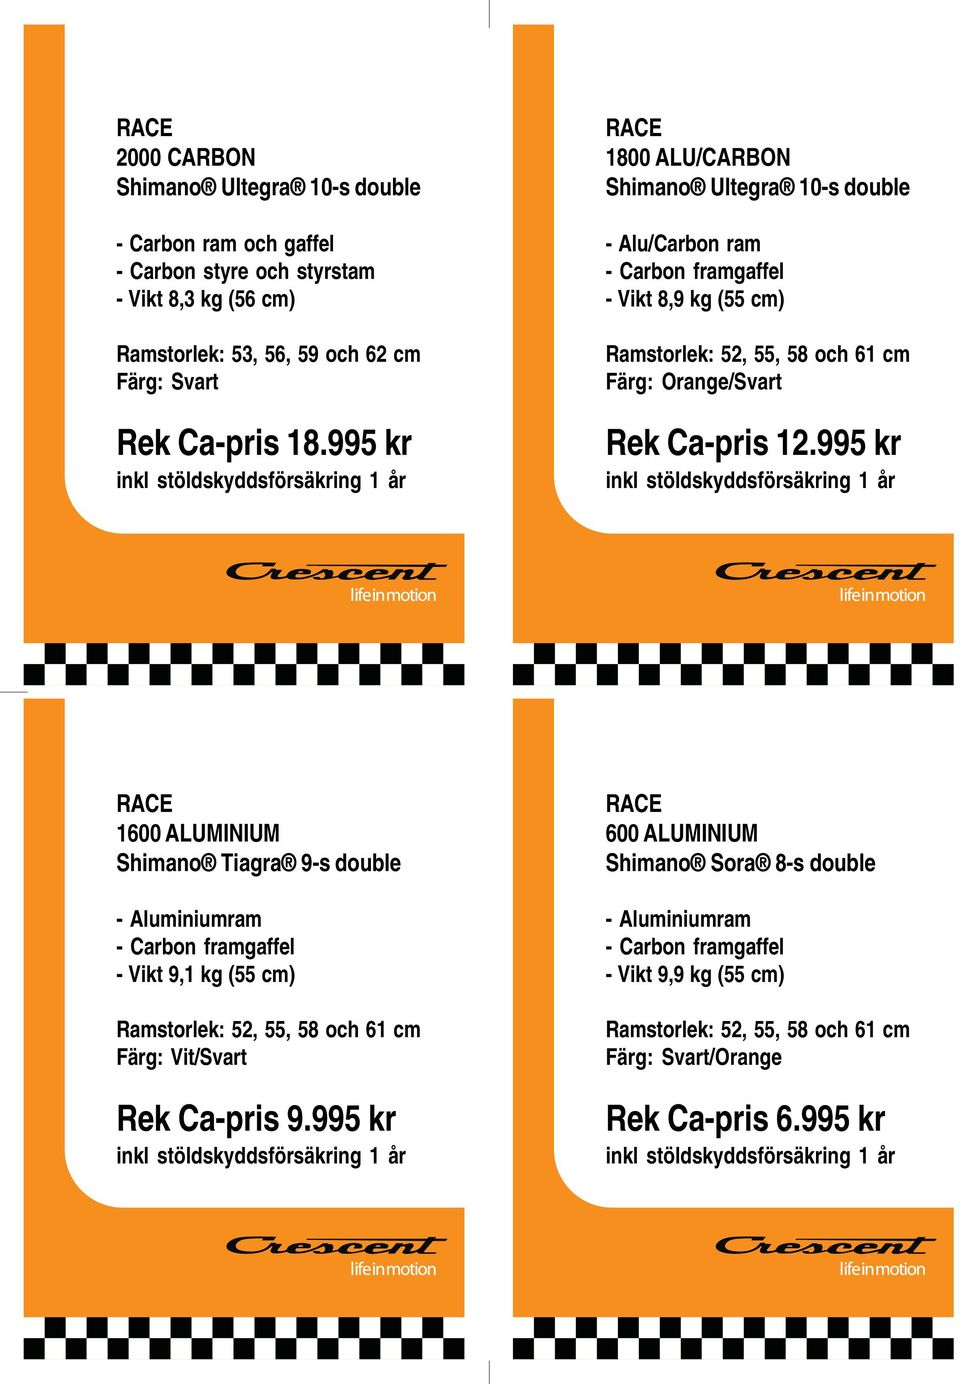 995 kr RACE 1800 ALU/CARBON Shimano Ultegra 10-s double - Alu/Carbon ram - Carbon framgaffel - Vikt 8,9 kg (55 cm) Ramstorlek: 52, 55, 58 och 61 cm Färg: Orange/Svart Rek